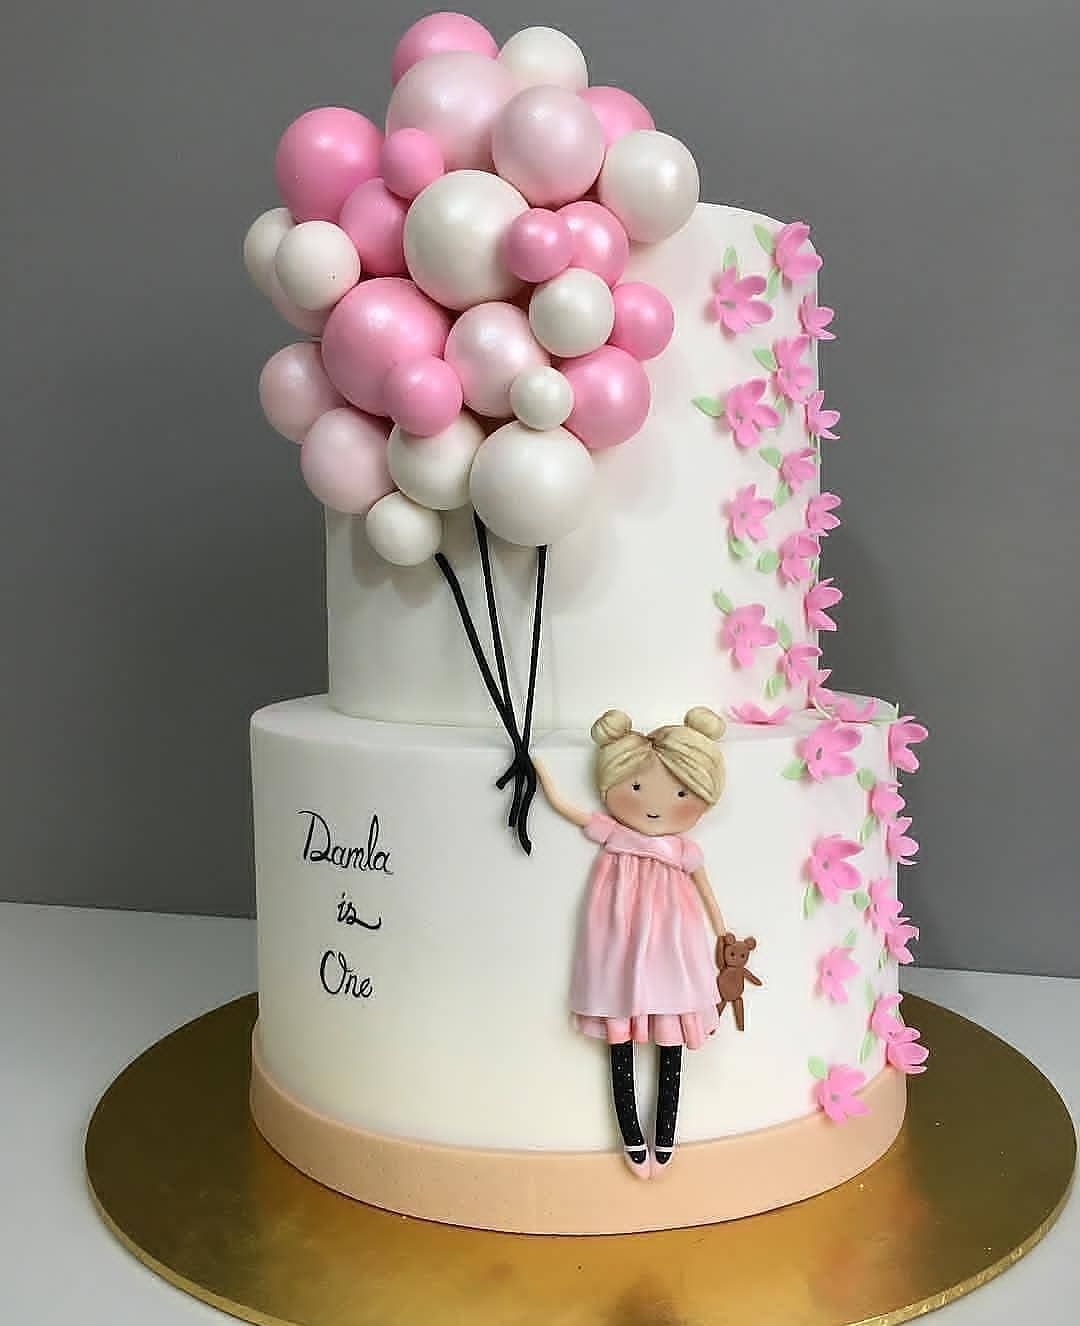 100 modelos de bolo de aniversário feminino para se inspirar